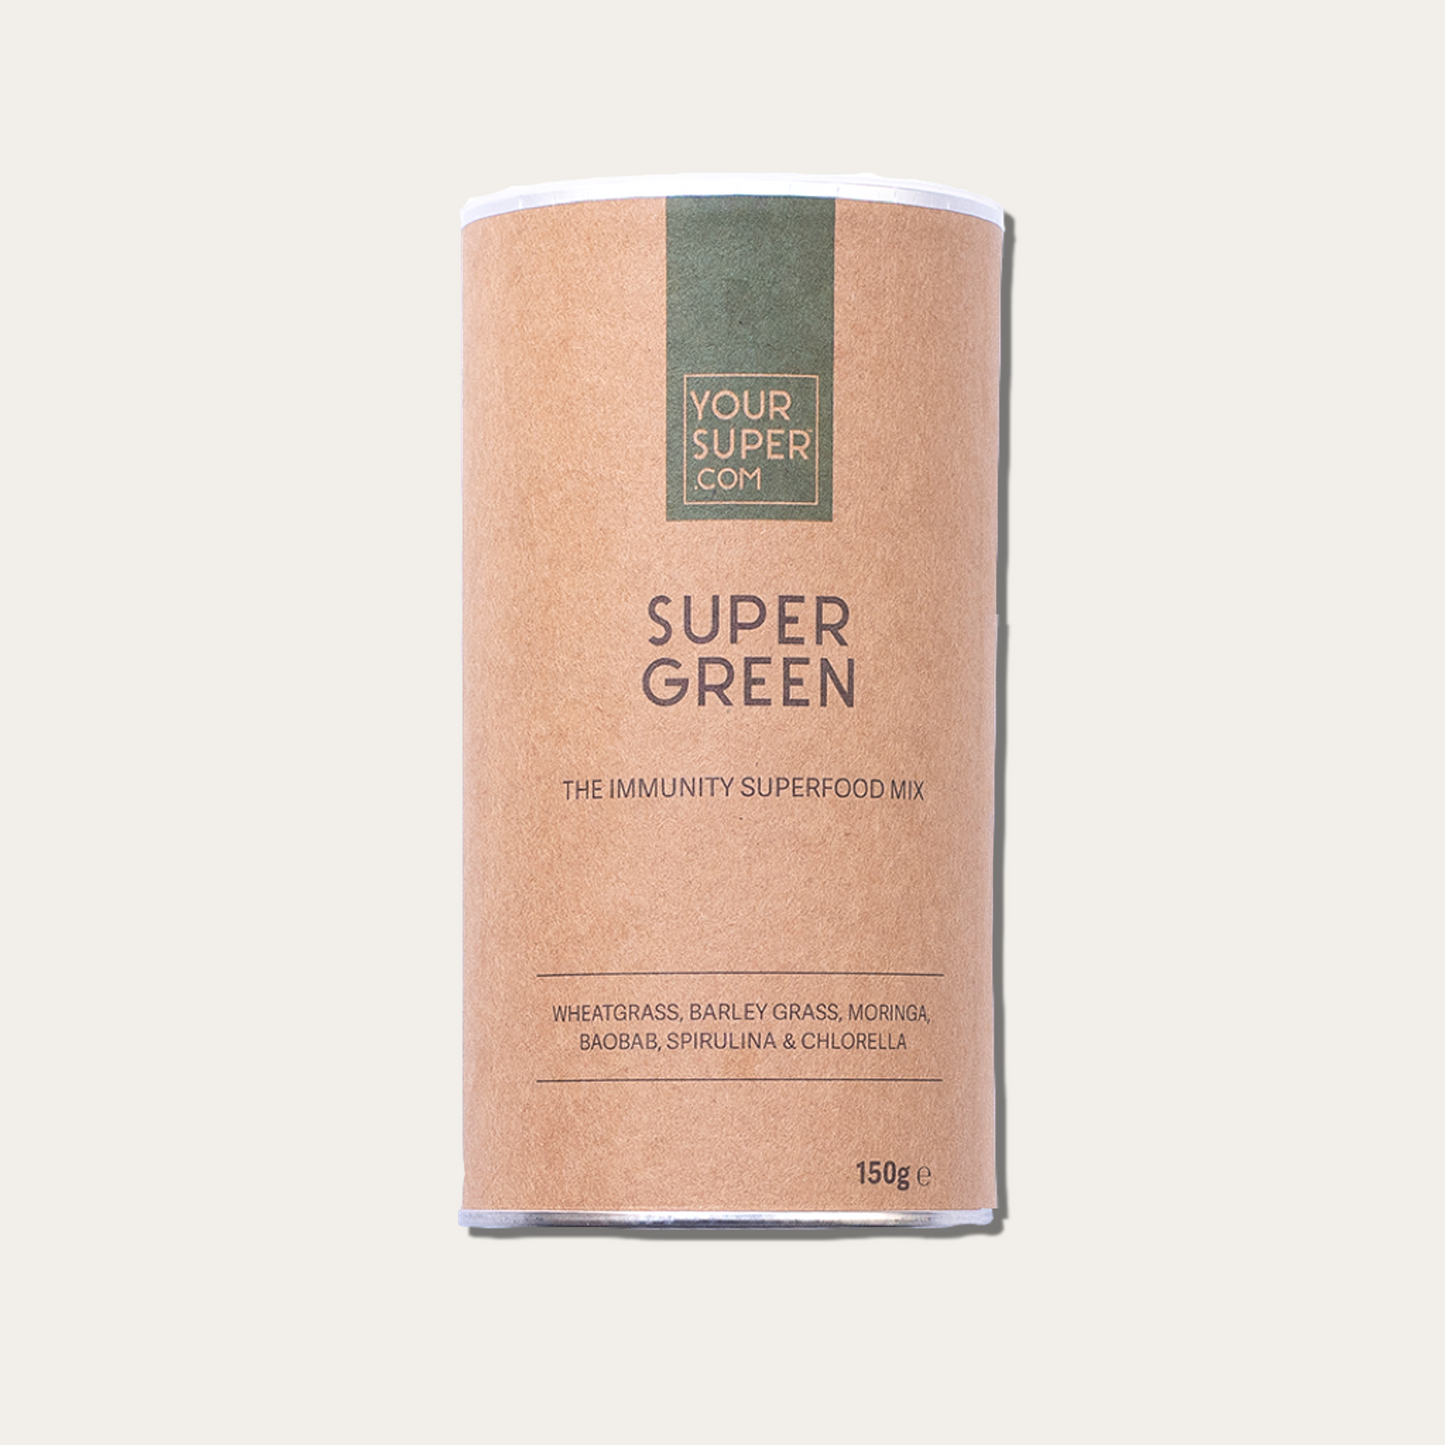 can of your superfoods super green 150g jadons uk